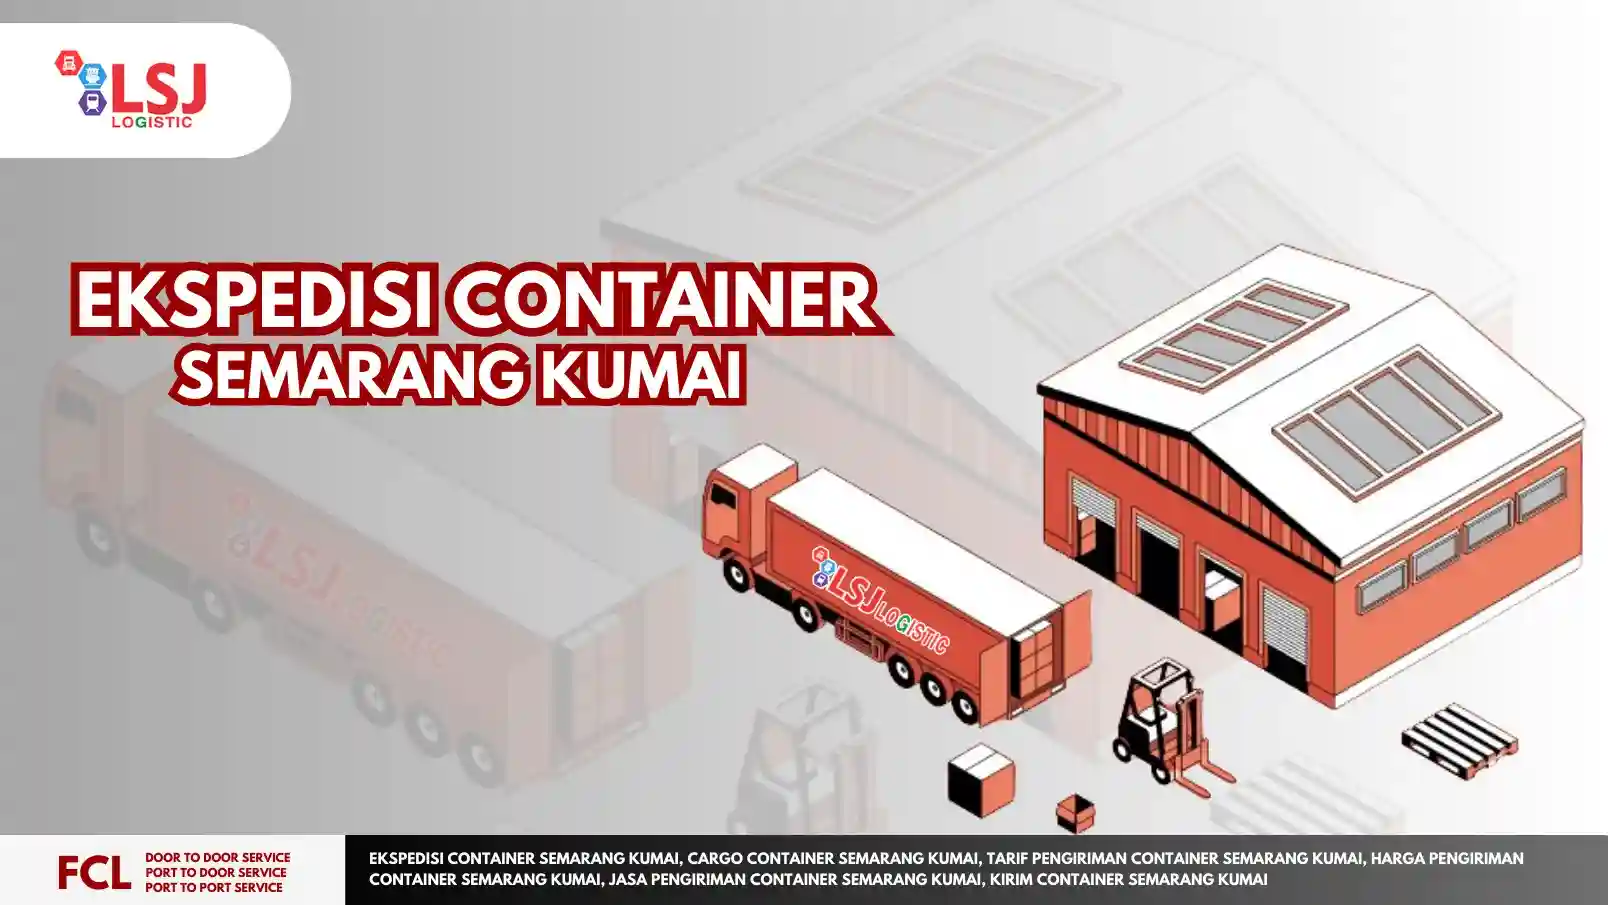 Ekspedisi Container Semarang Kumai